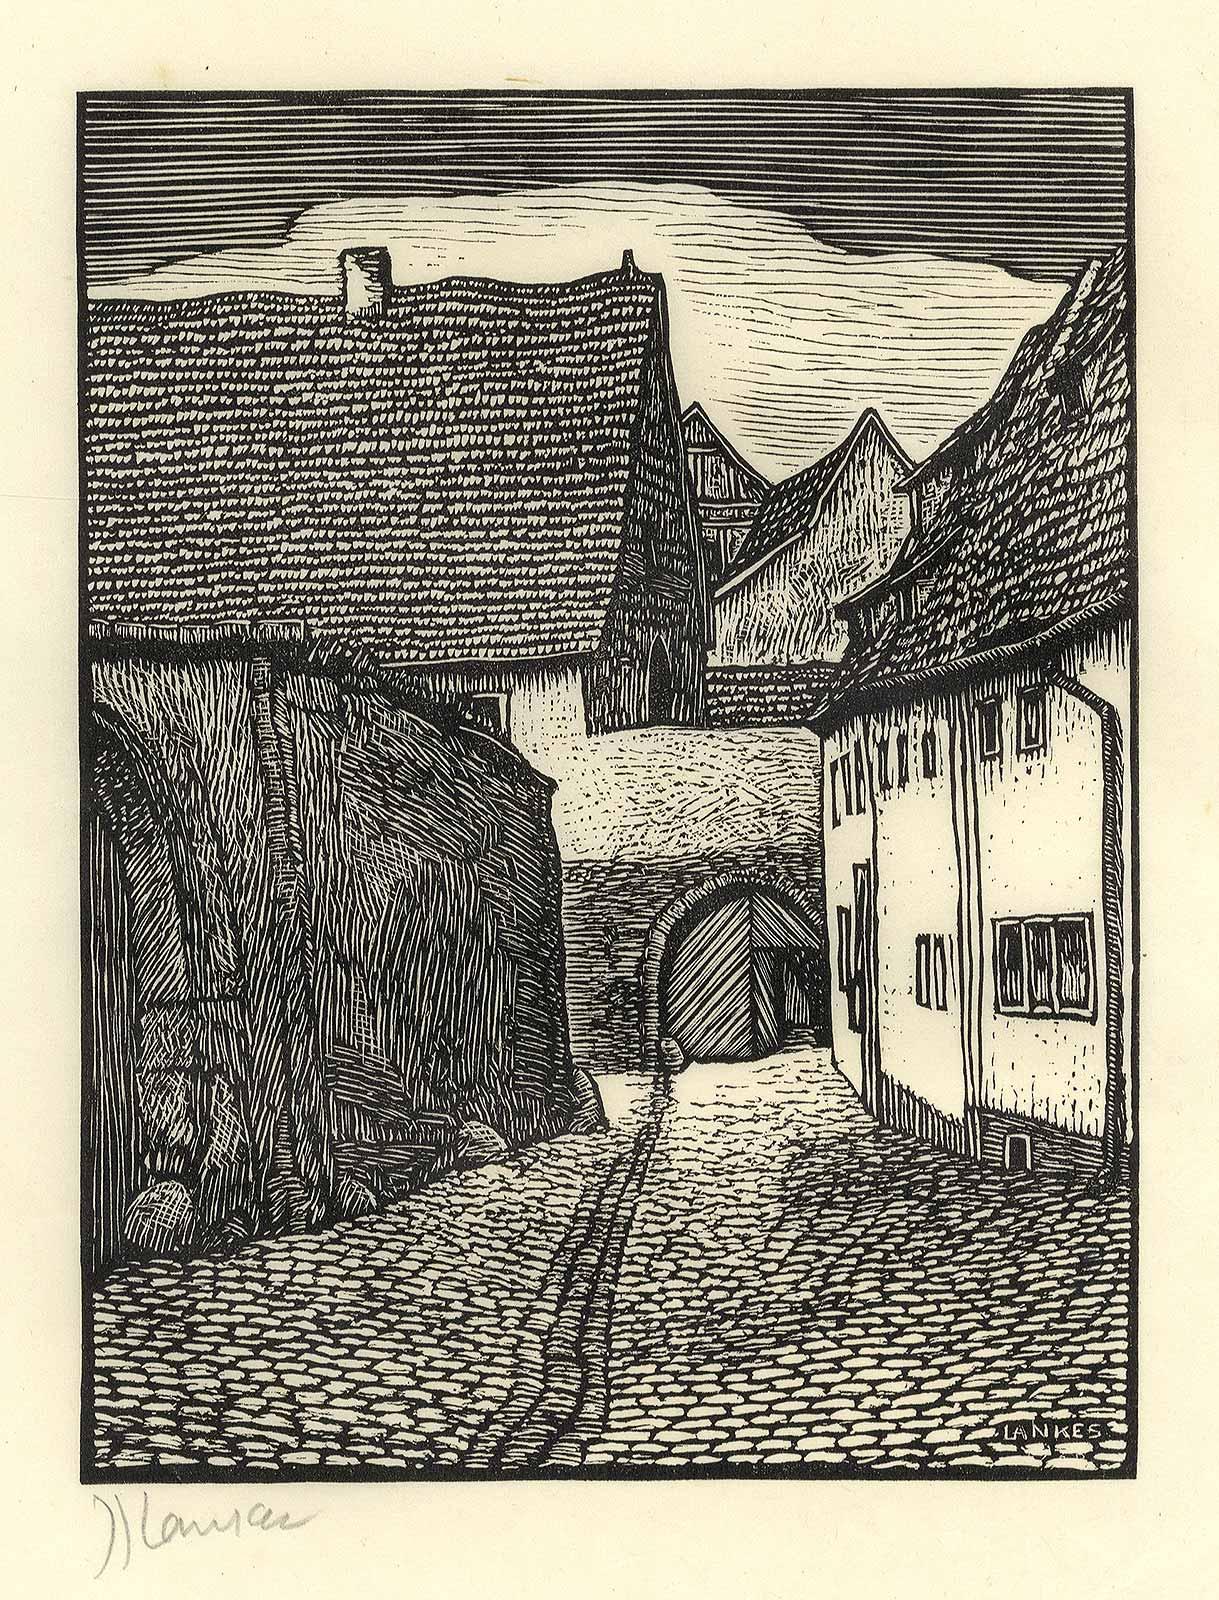 Village Scene - Black Landscape Print by Julius Lankes